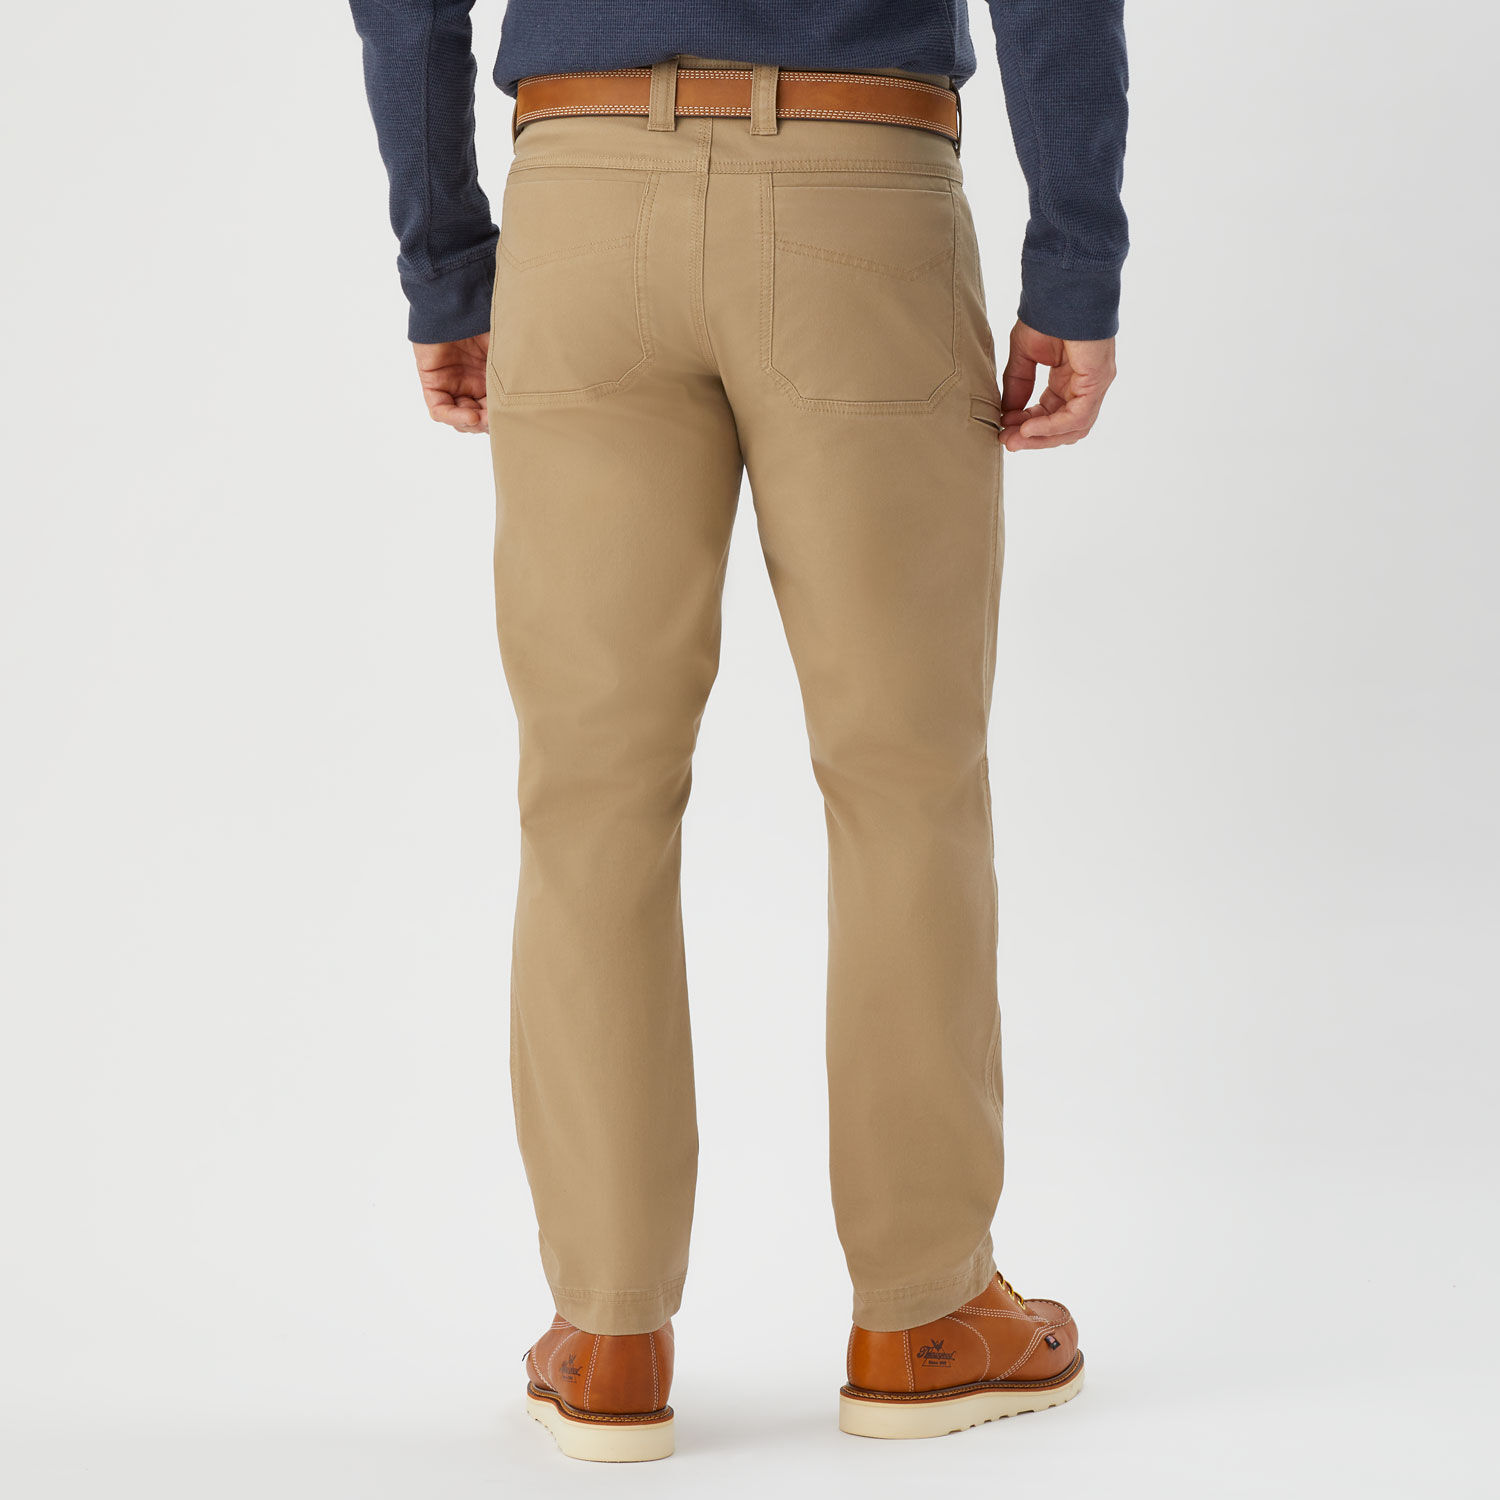 L.L. Bean Perfect Fit Pants Jersey Original Straight Leg Tapered, Sz XL,  Grey | Workout pants, Perfect fit, Straight leg